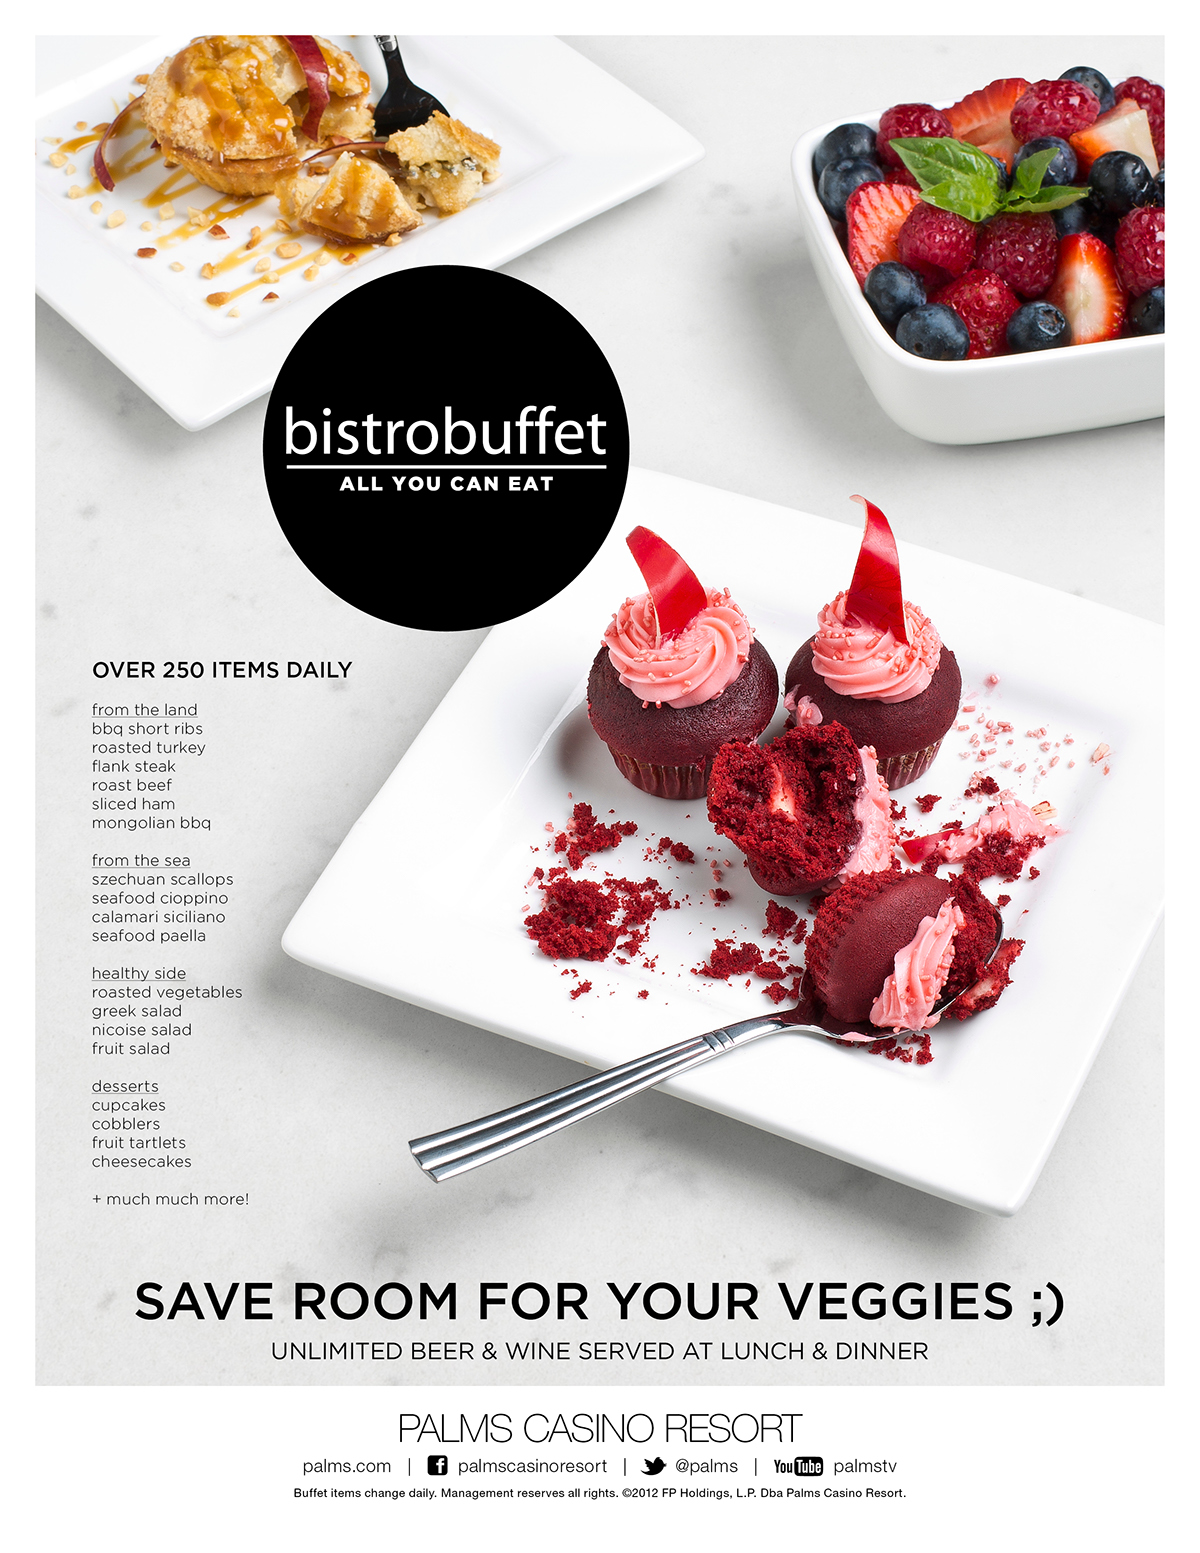 campaign  buffet food photography  FOOD  design  dessert   cupcake  wine  casino  resort